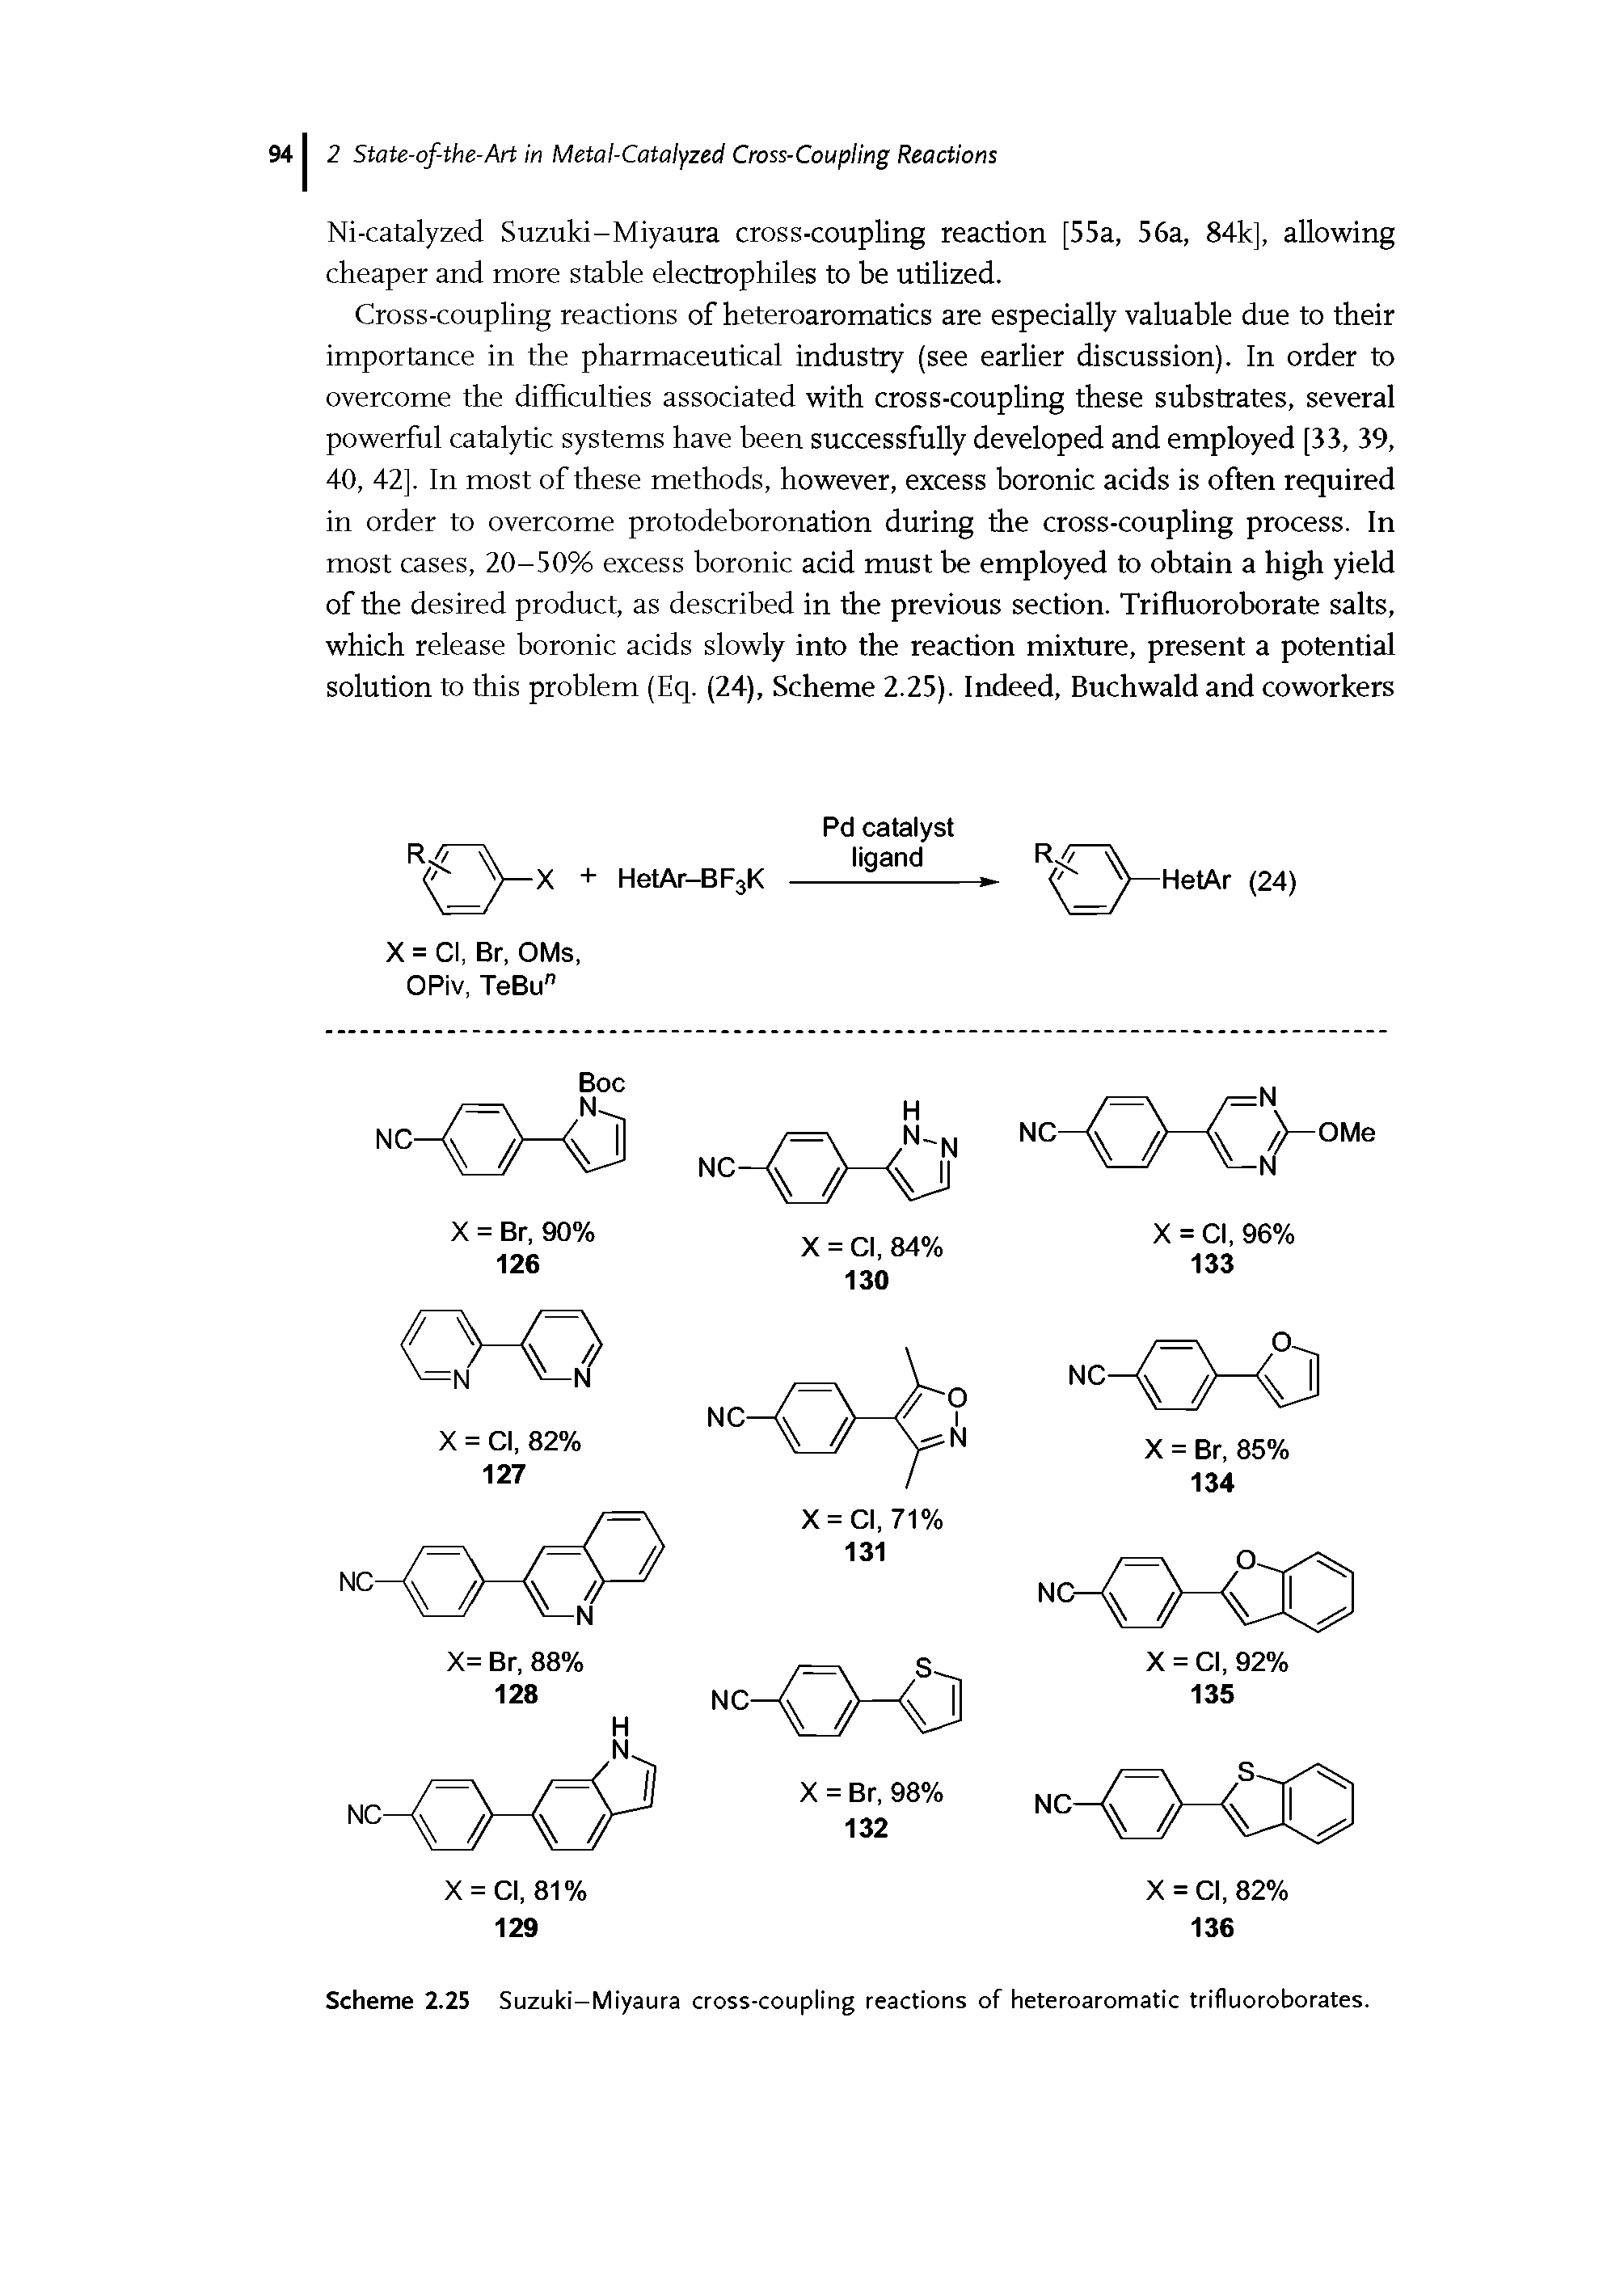 Scheme 2.25 Suzuki-Miyaura cross-coupling reactions of heteroaromatic trifluoroborates.